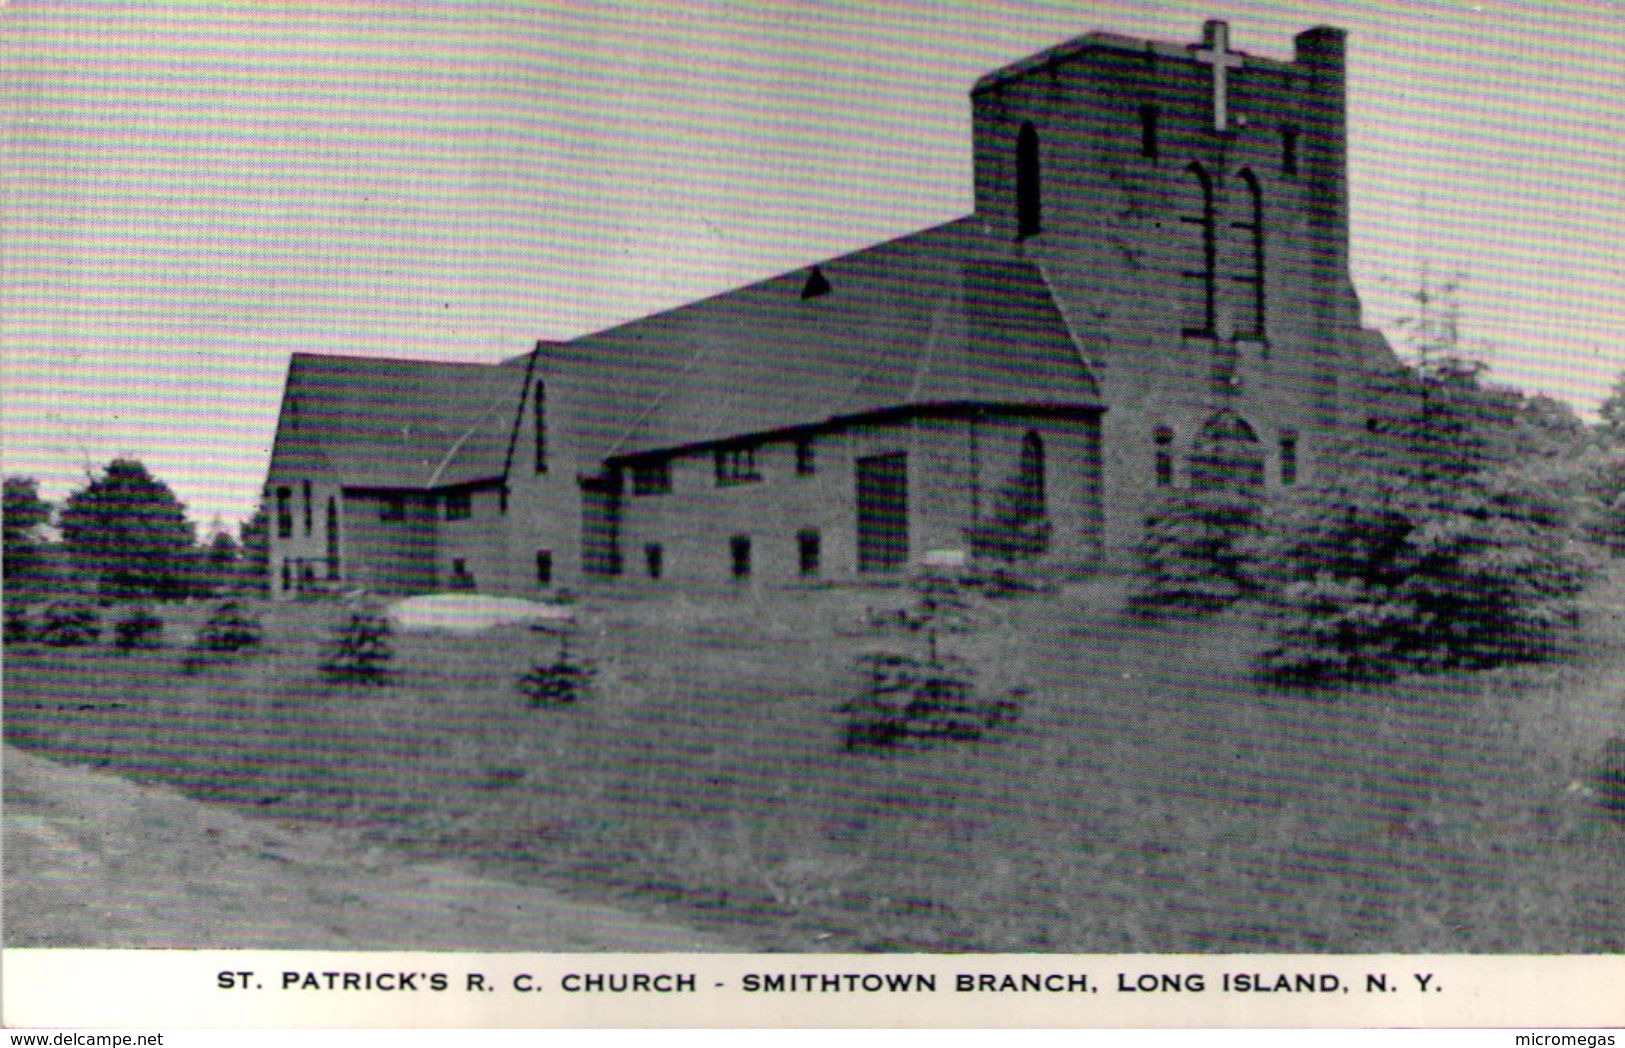 Patrick's R.C. Church - Smithtown Branch, Long Island, N.Y. - Long Island